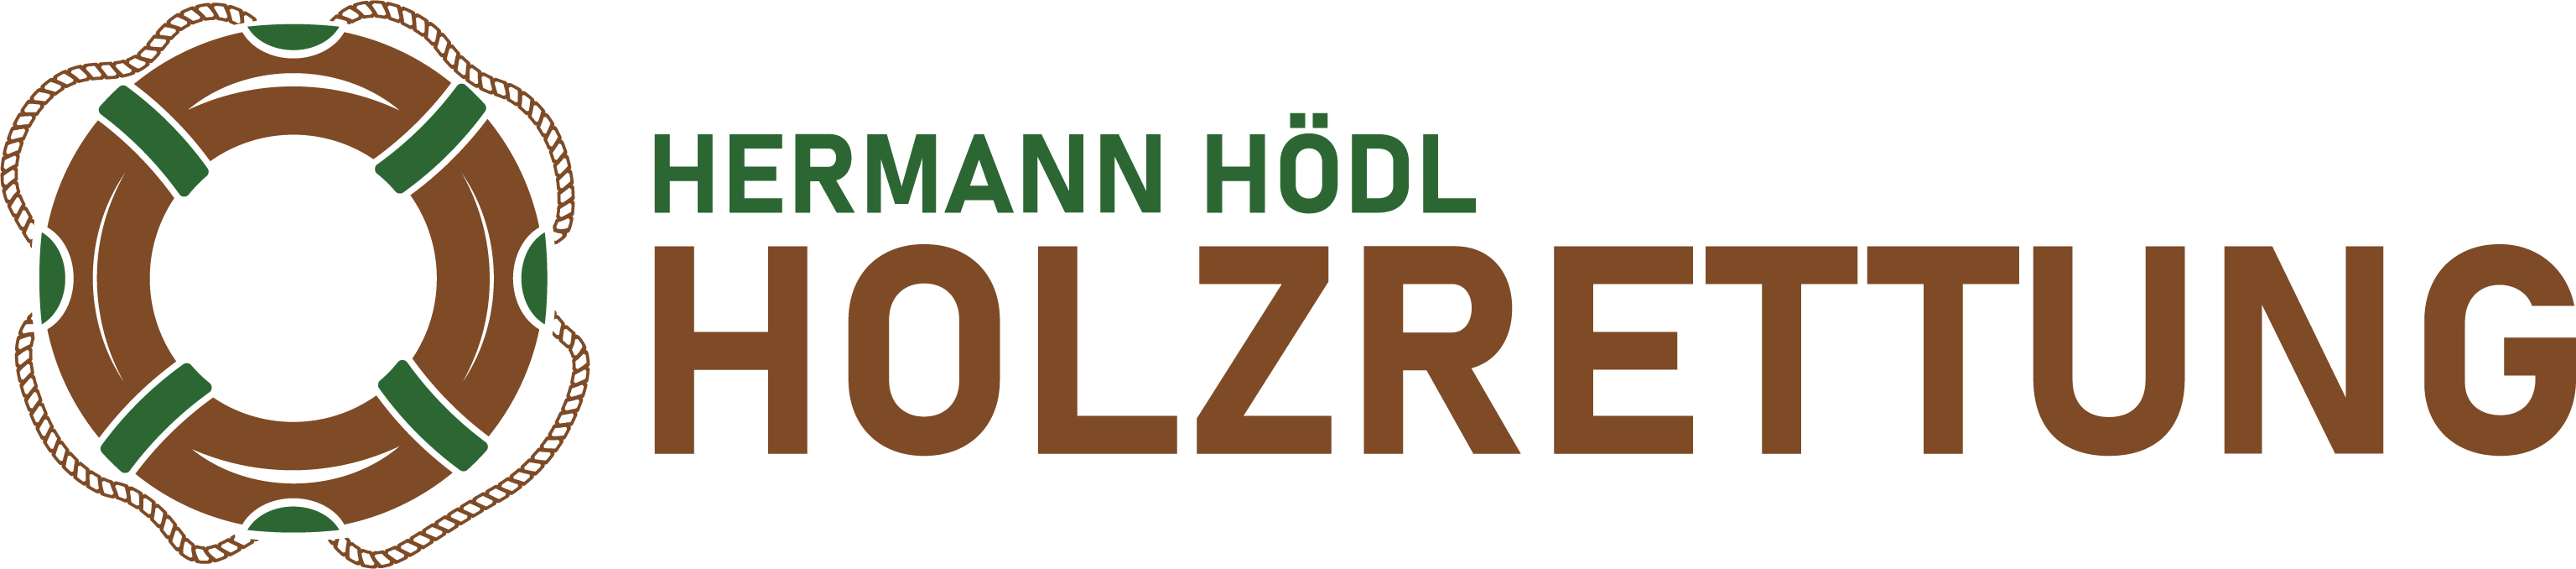 Logo Holzrettung